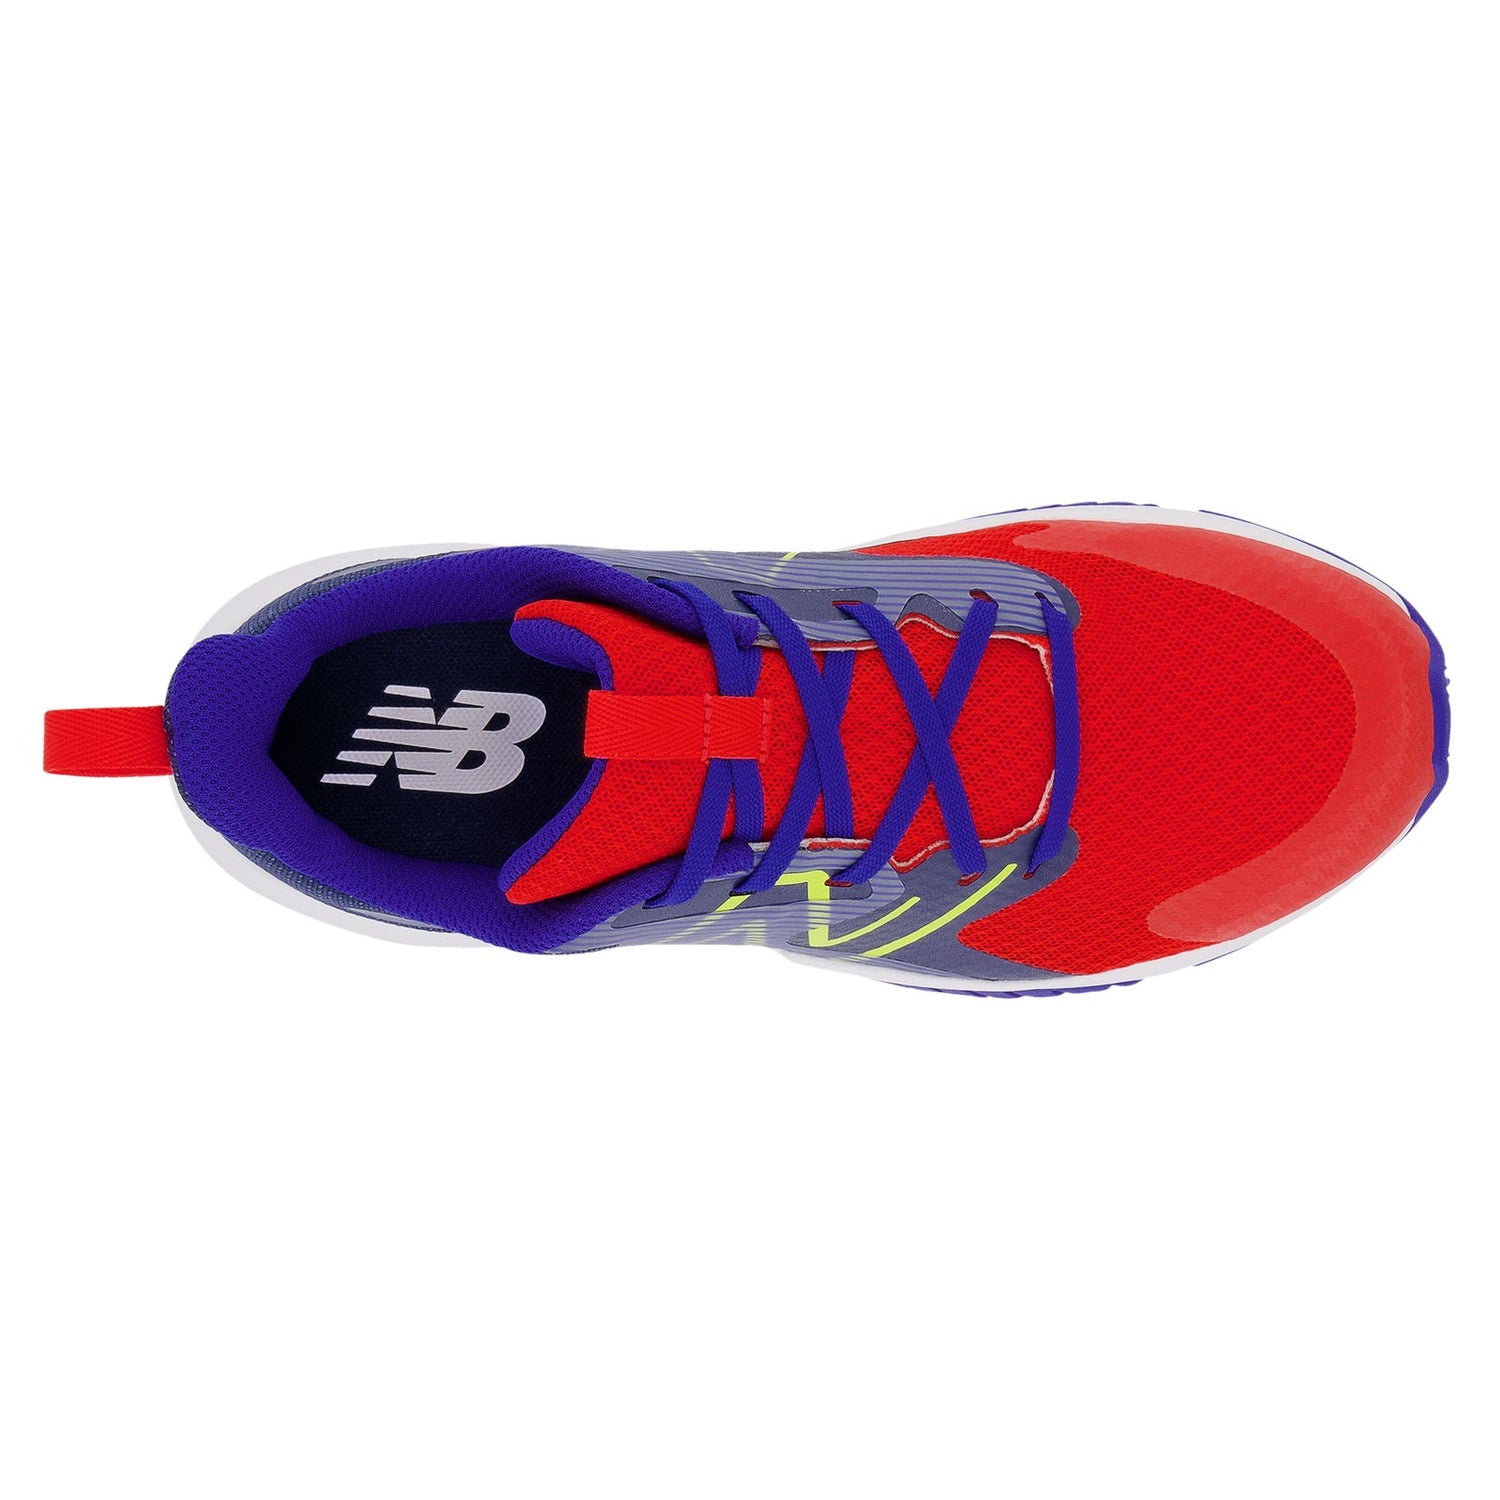 Peltz Shoes  Boy's New Balance Rave Run v2 Sneaker - Big Kid RED BLUE GKRAVWR2